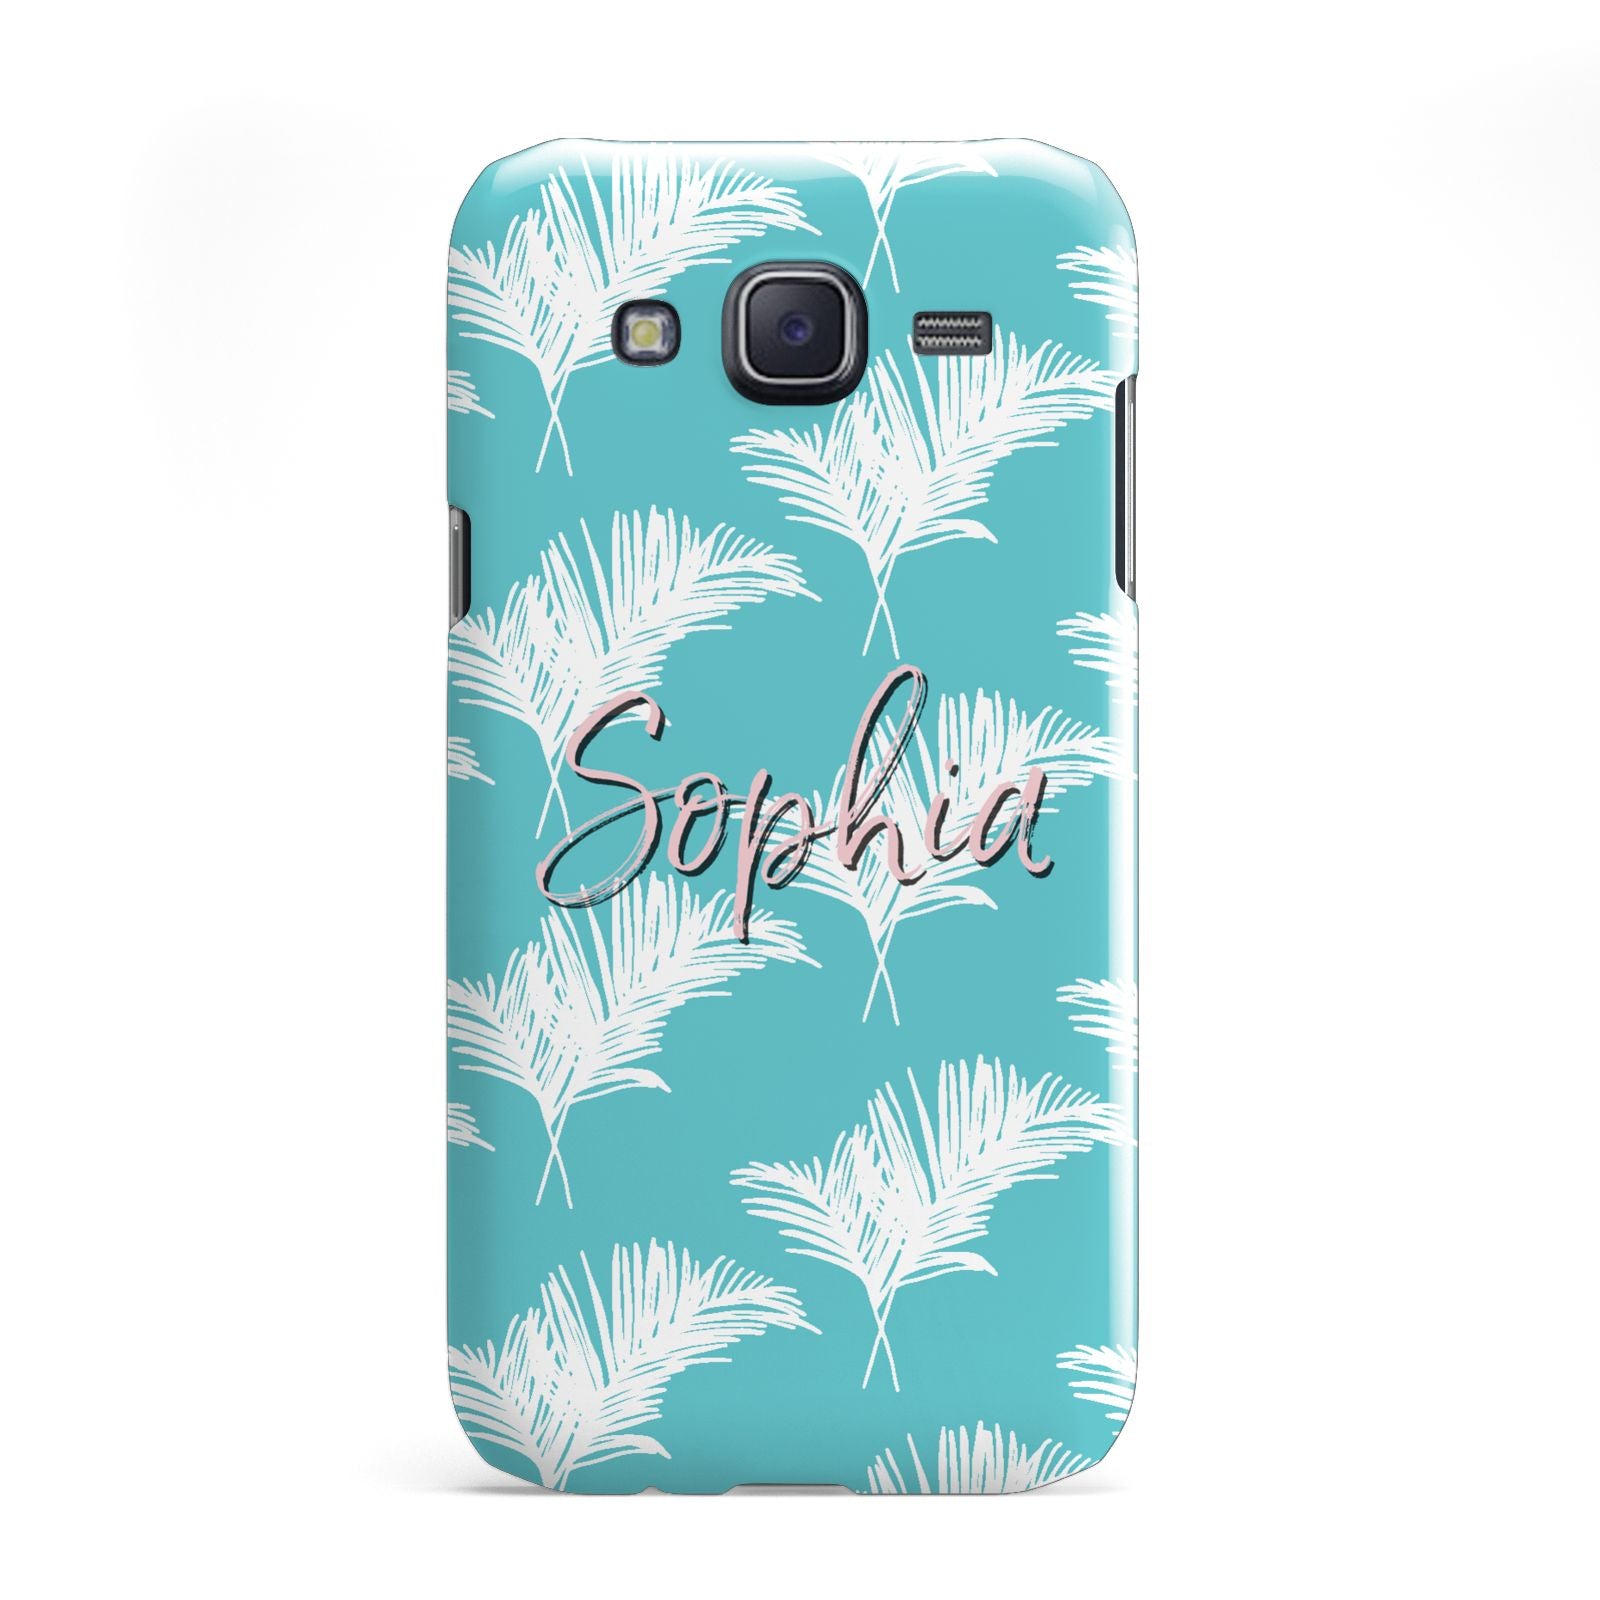 Personalised Blue White Tropical Foliage Samsung Galaxy J5 Case